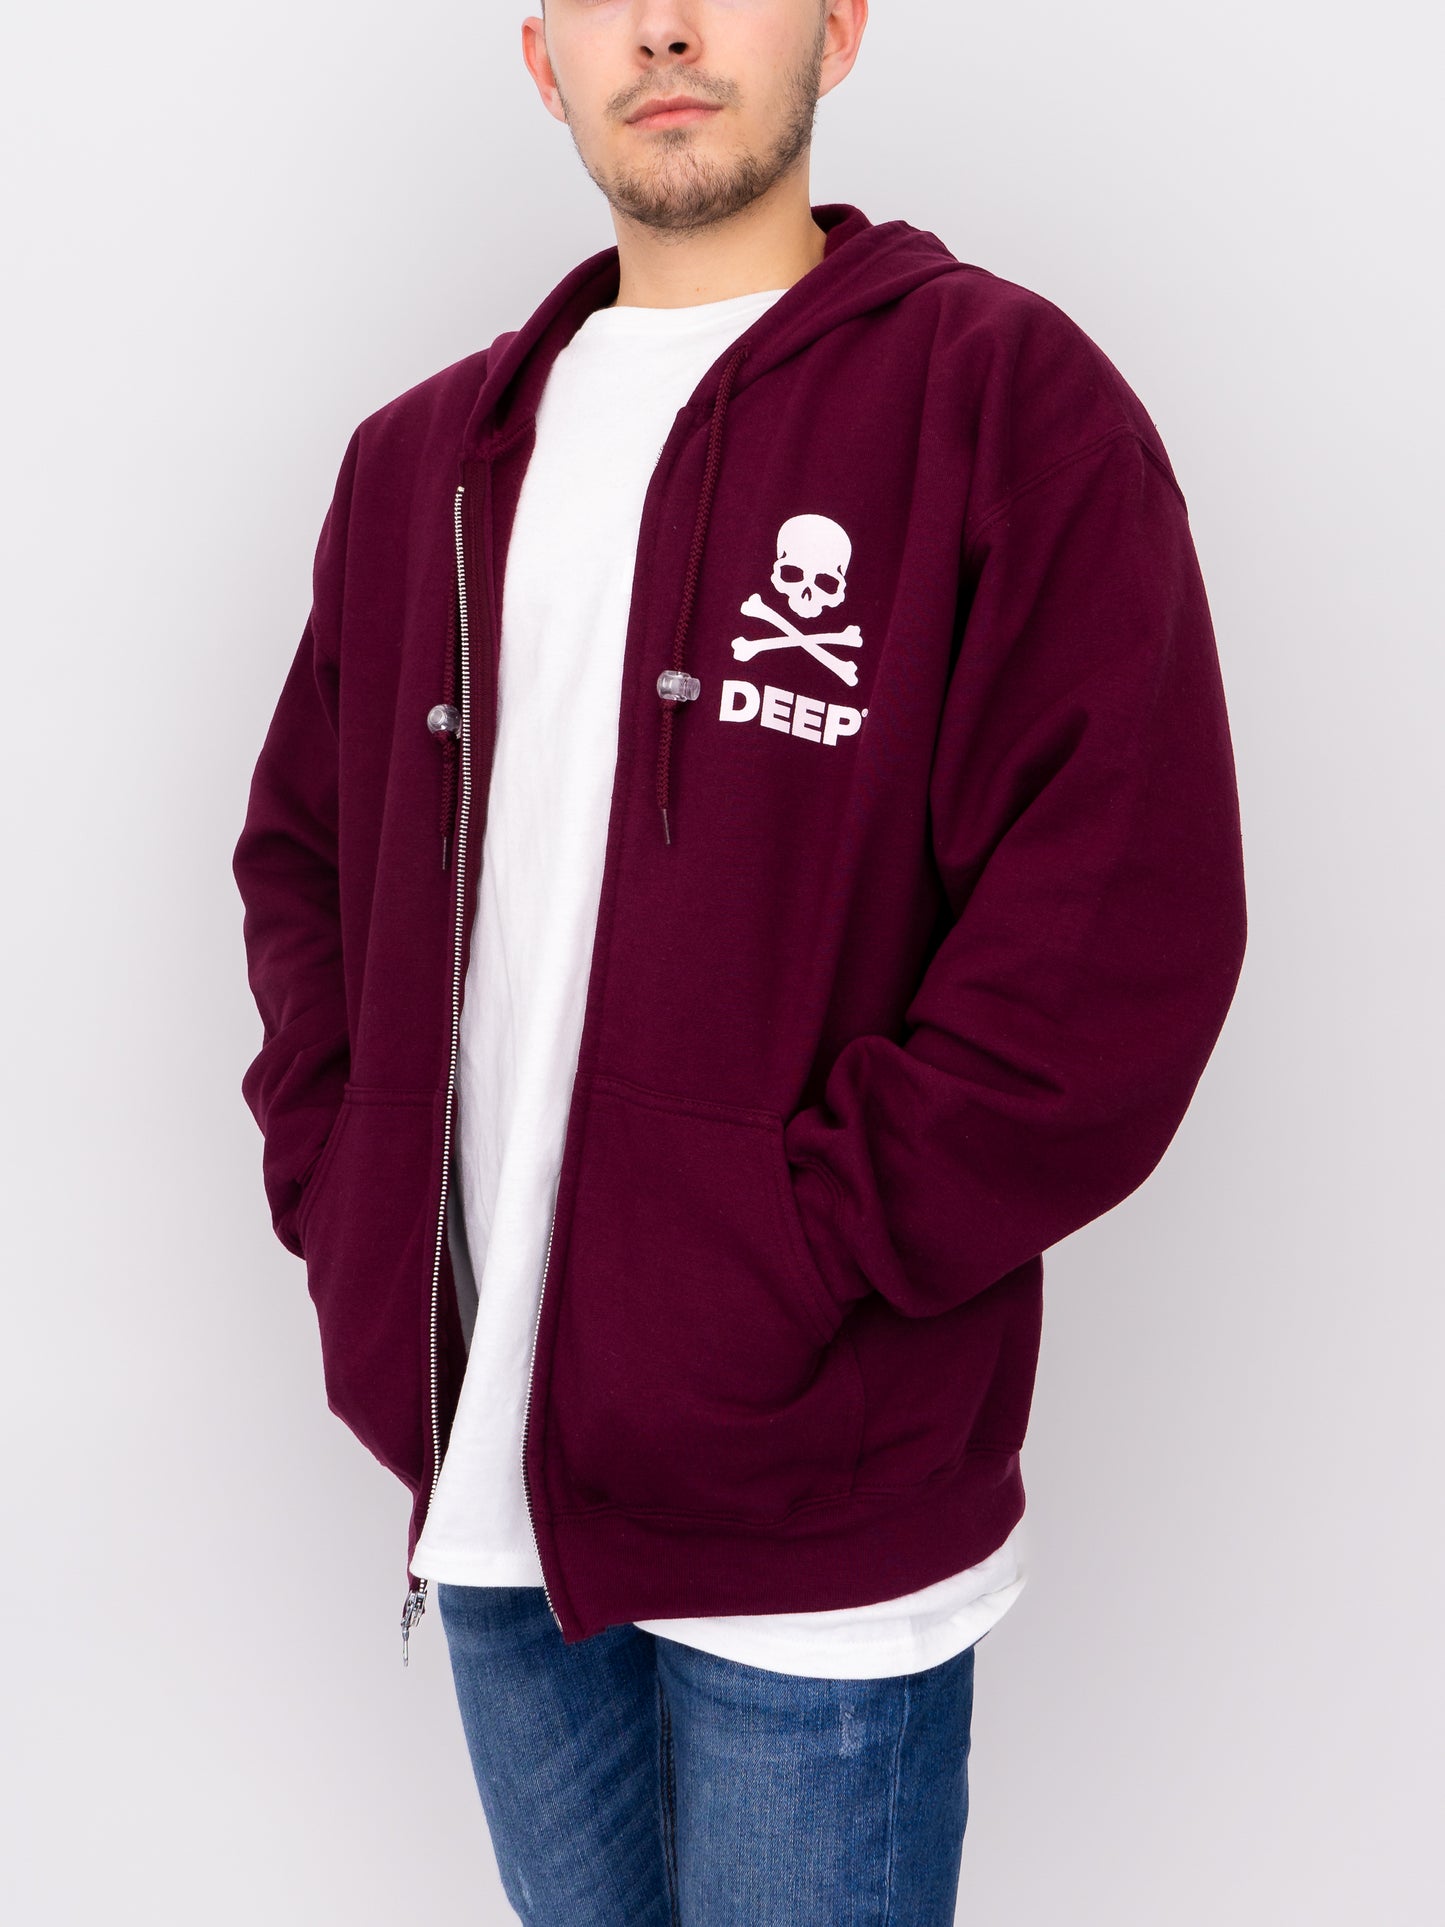 Crossbones Hooded Sweatshirt (Zip) - Maroon - DEEP Clothing